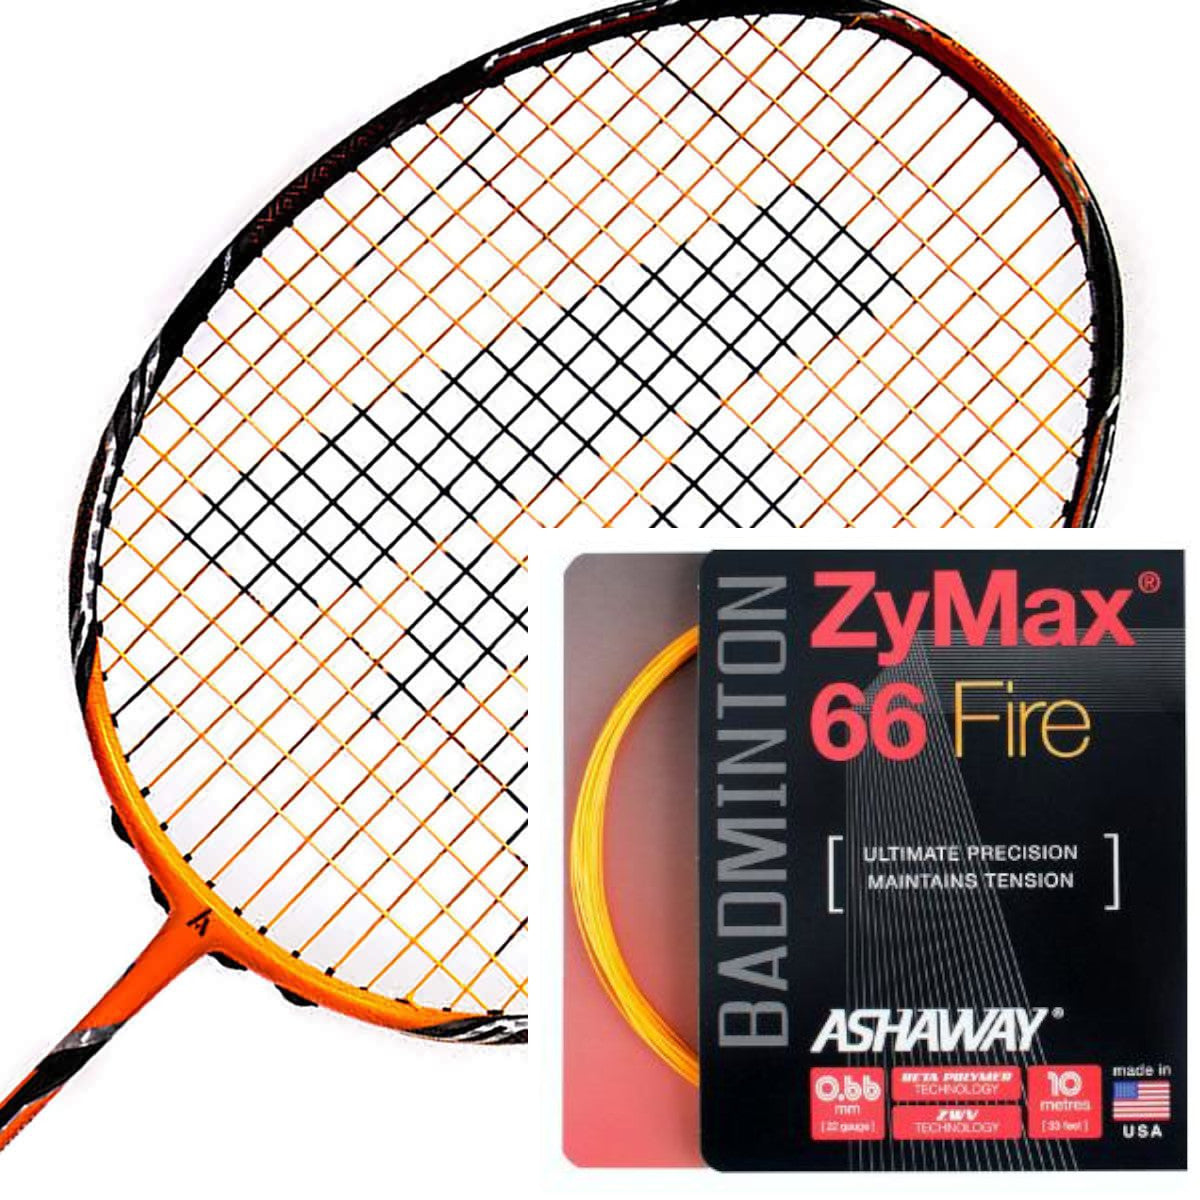 Ashaway Zymax 66 Fire Badminton String Orange - 0.66MM - 10m Packet